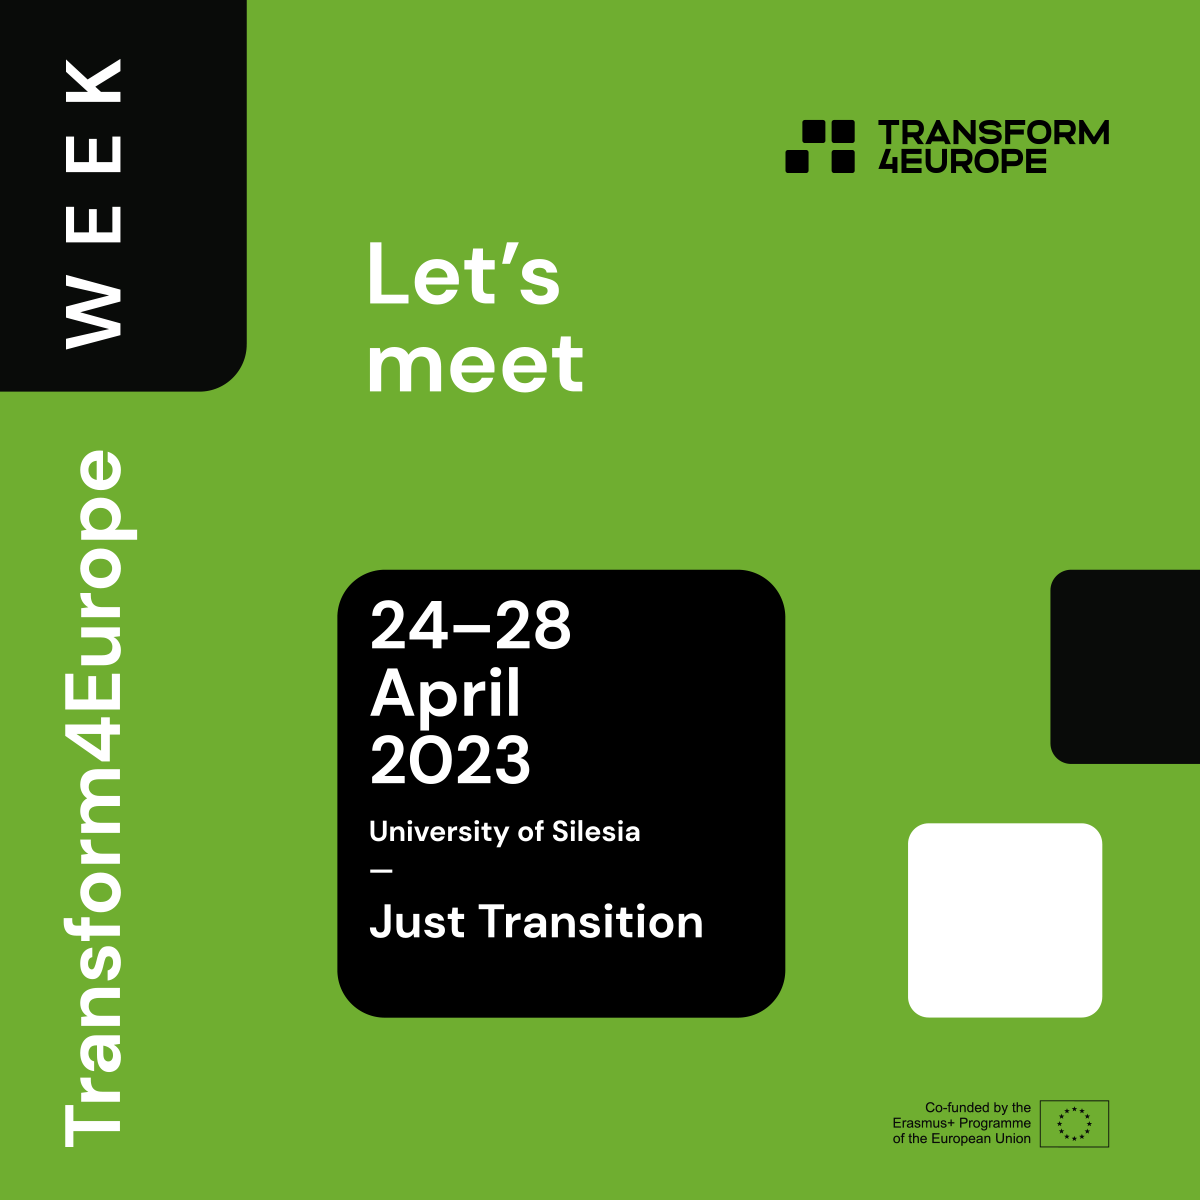 Transform4Europe Week Let's meet 24–28 April 2023, University of Silesia, Just Transition